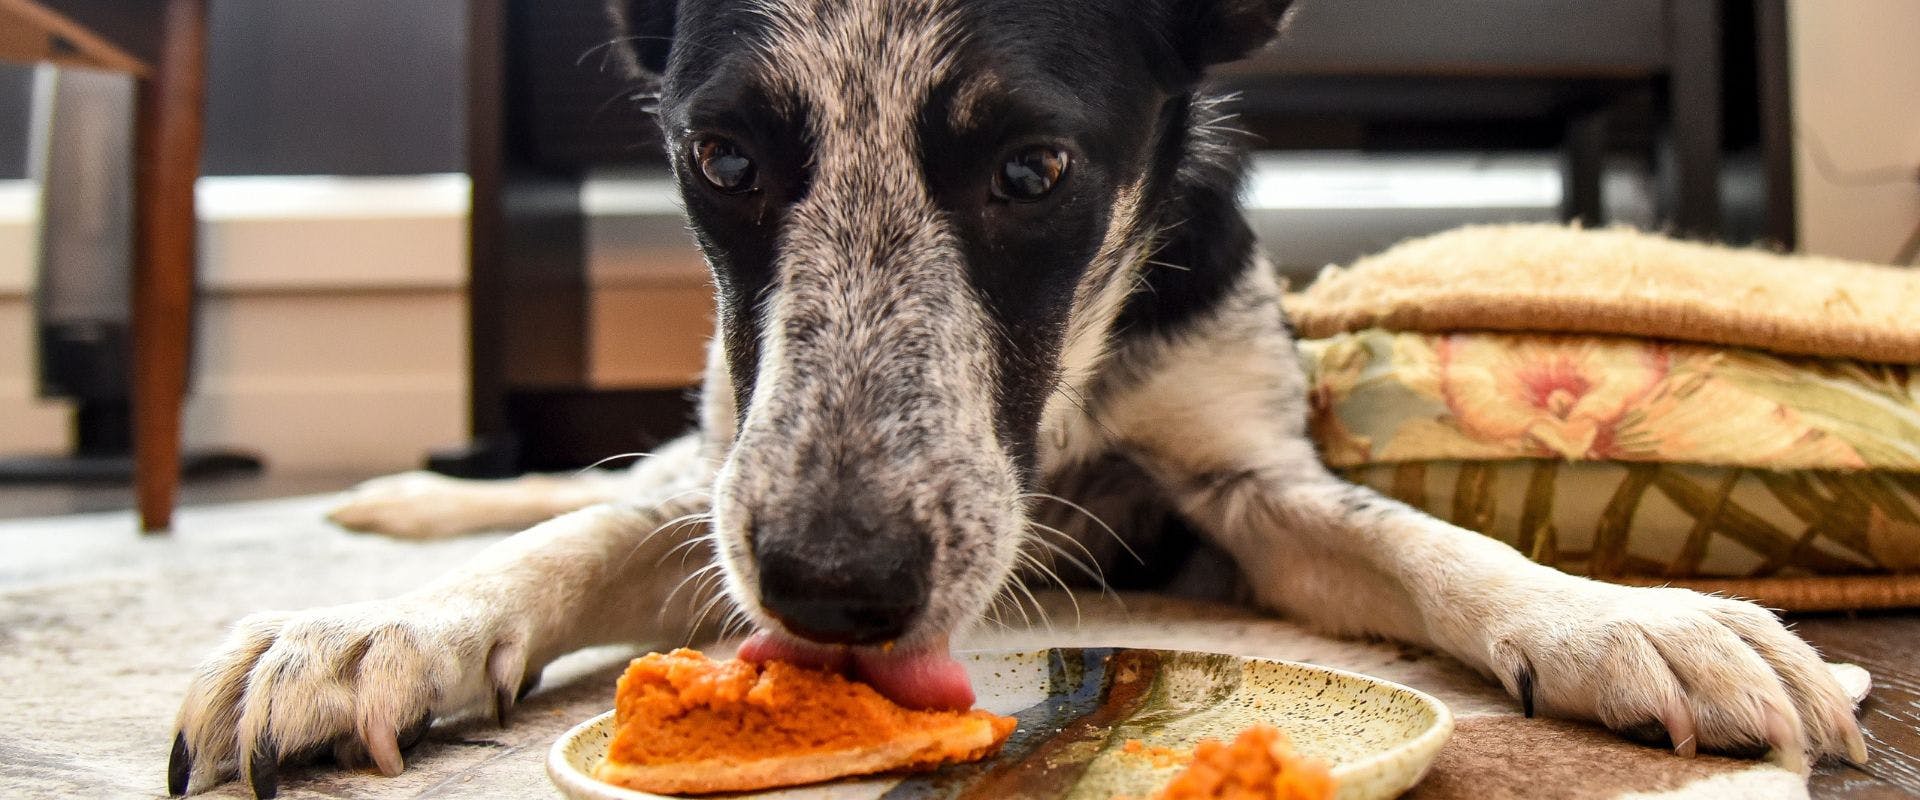 Black and white dog licking a pumpkin pie